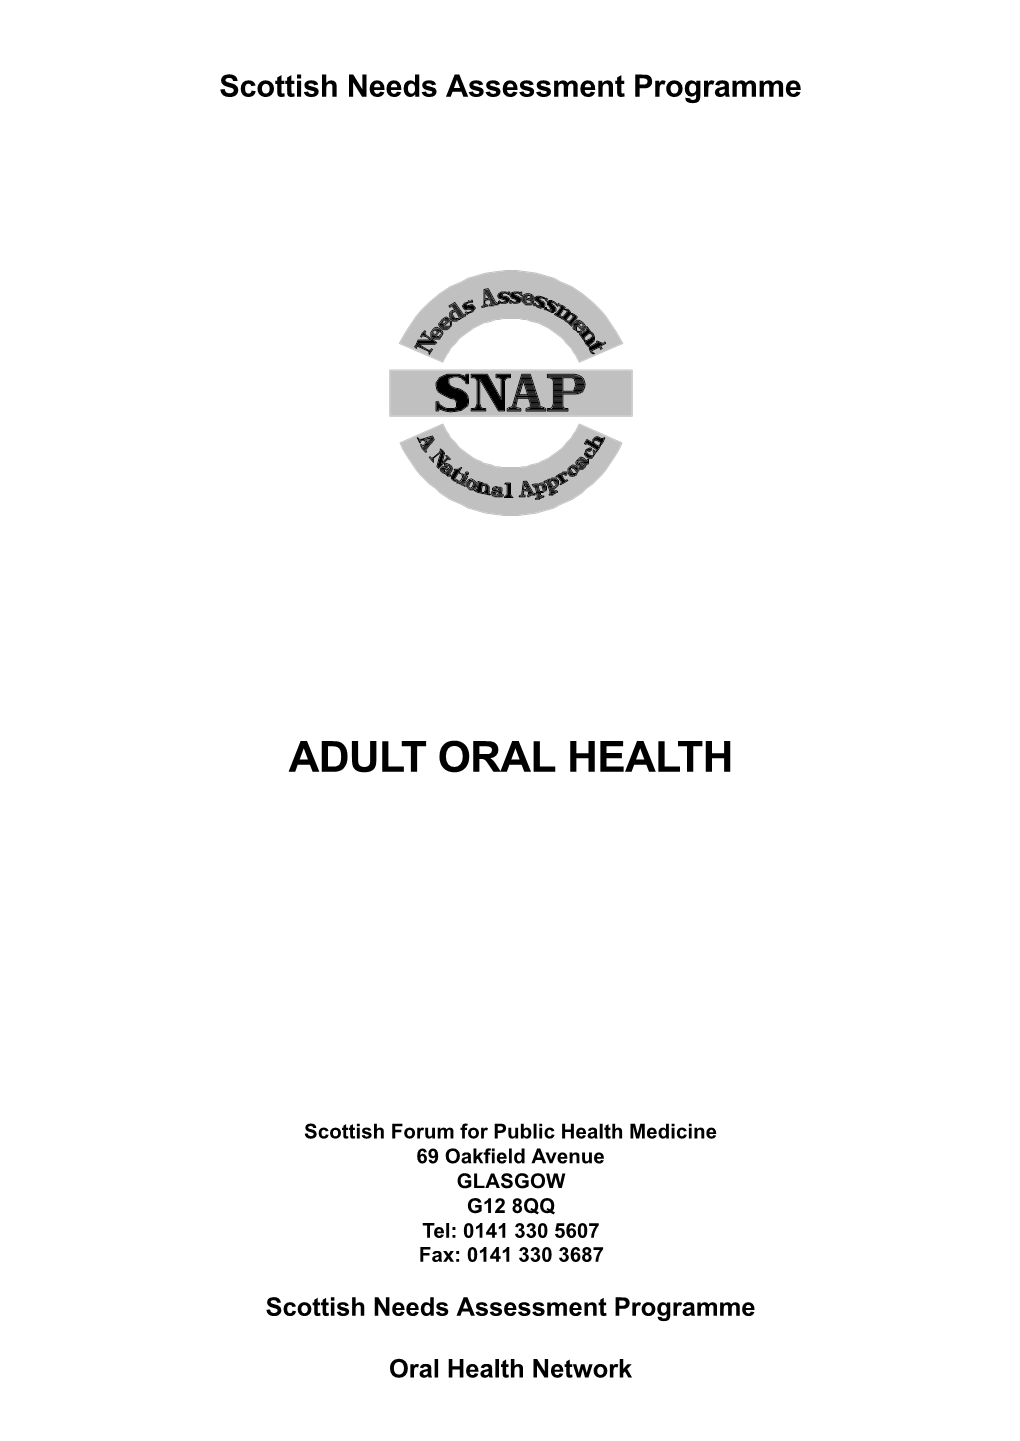 Adult Oral Health